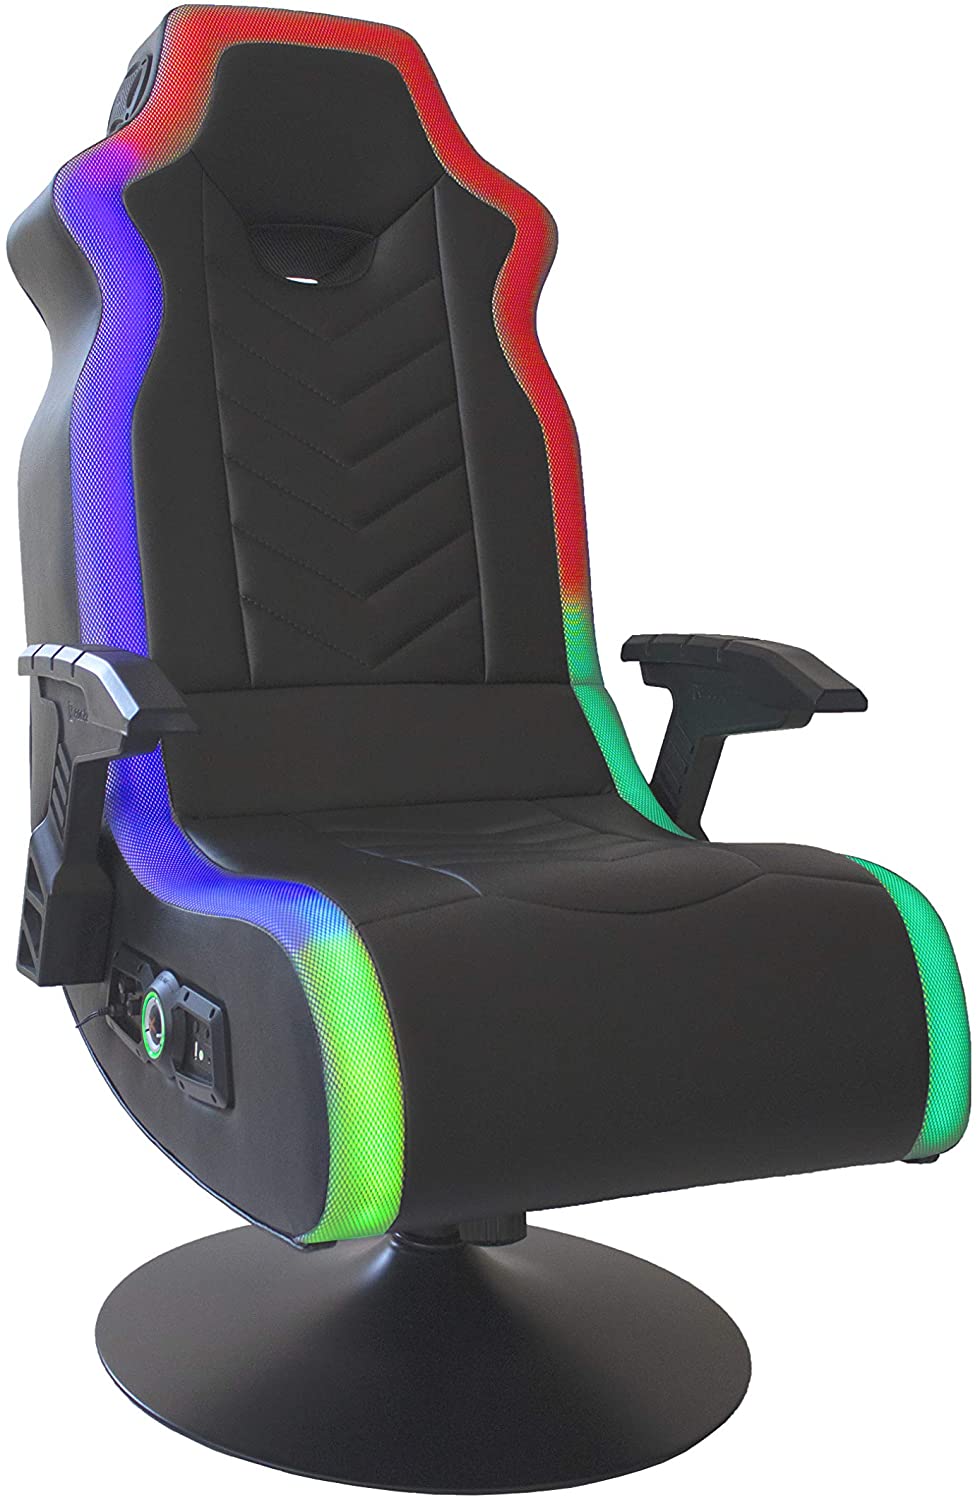 X Rocker Zeta best gaming chairs with speakers